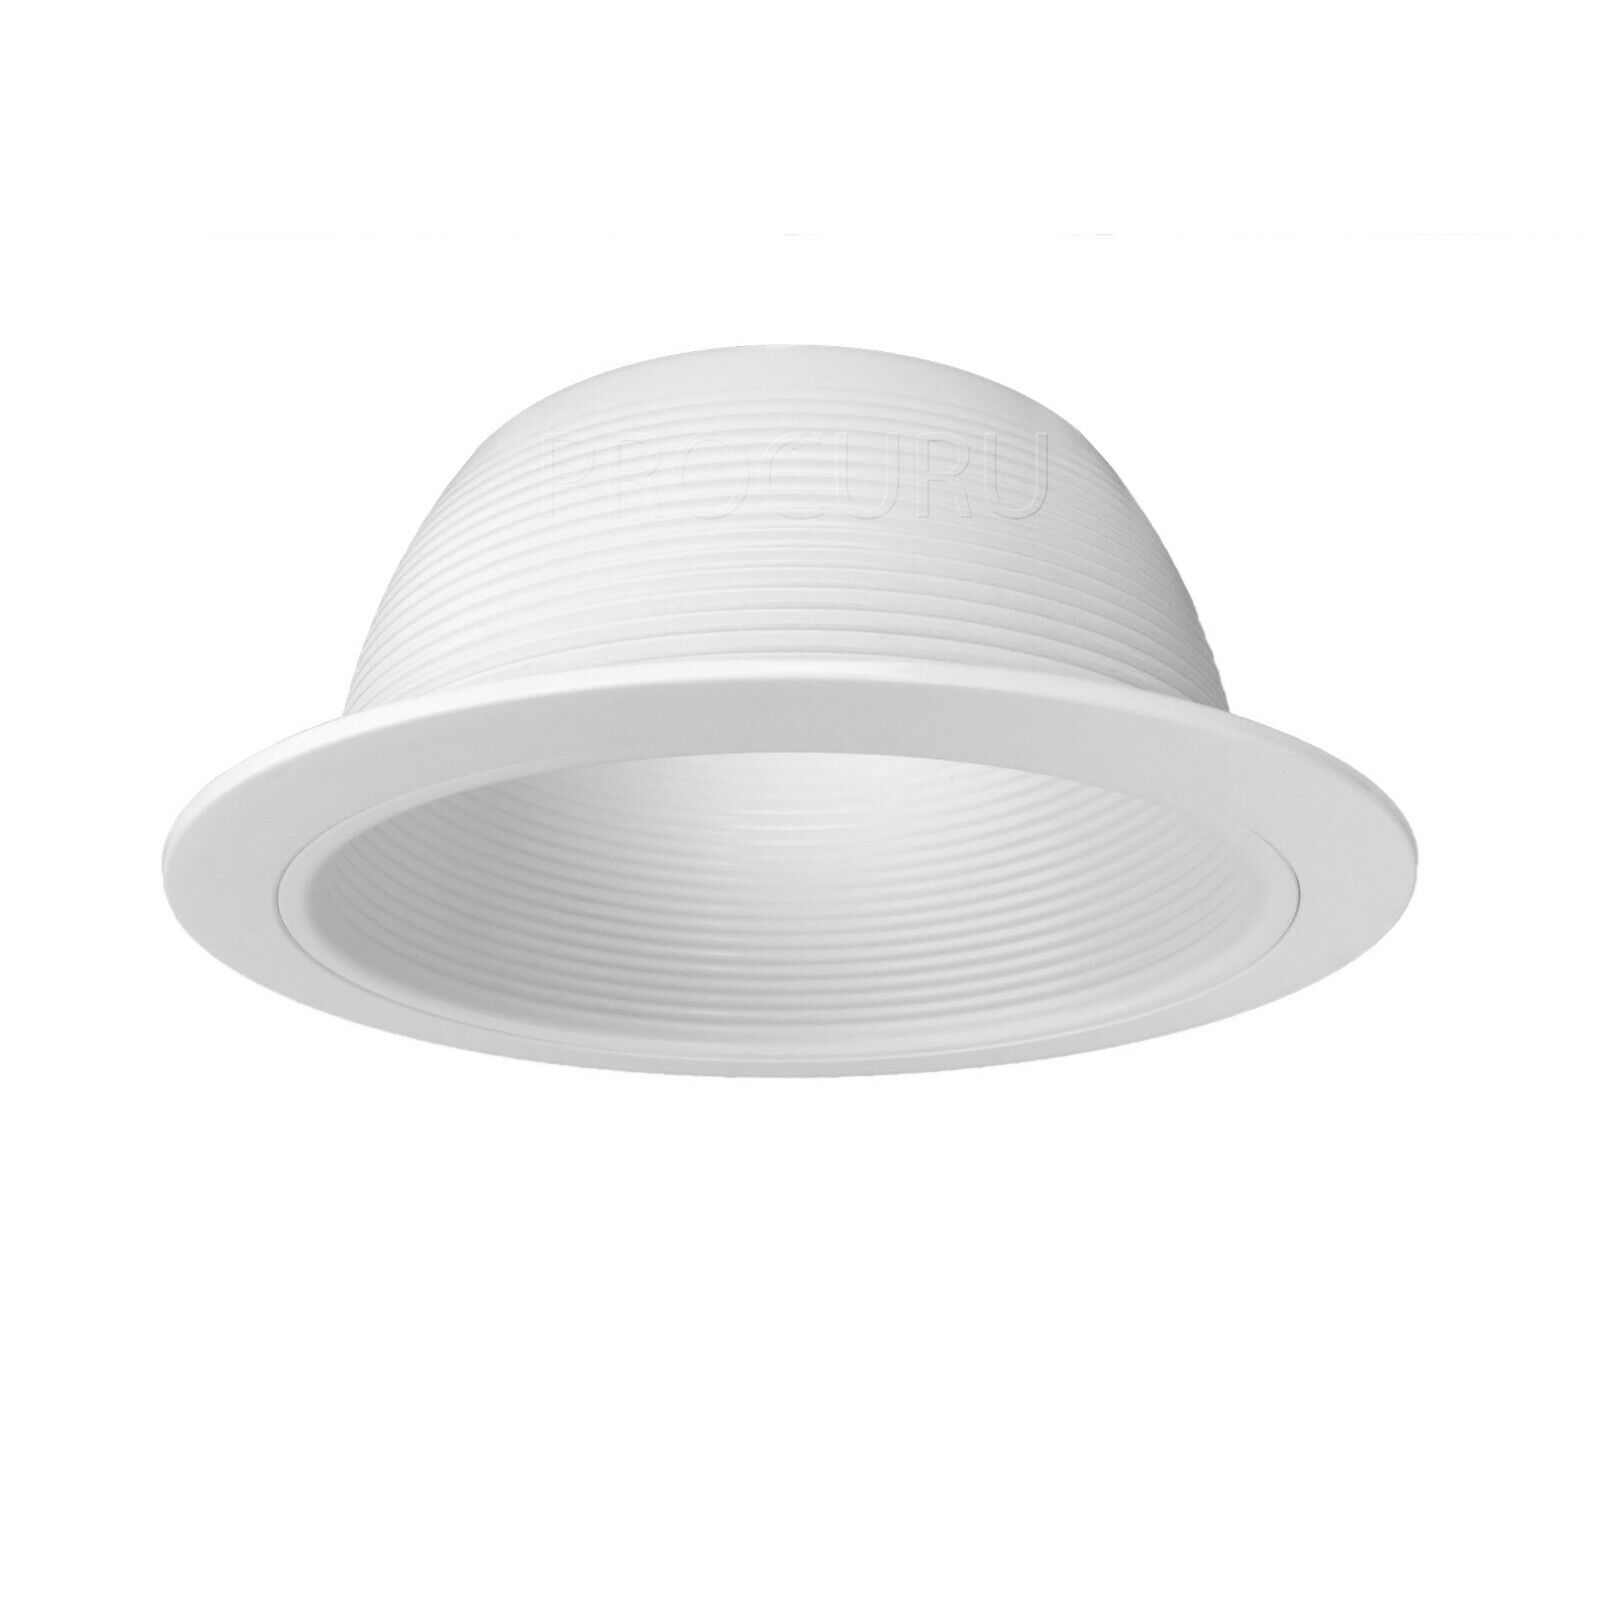 [48-Pack] 6" Inch Ceiling Recessed Can Light Baffle Trim Cover, White PROCURU SB30